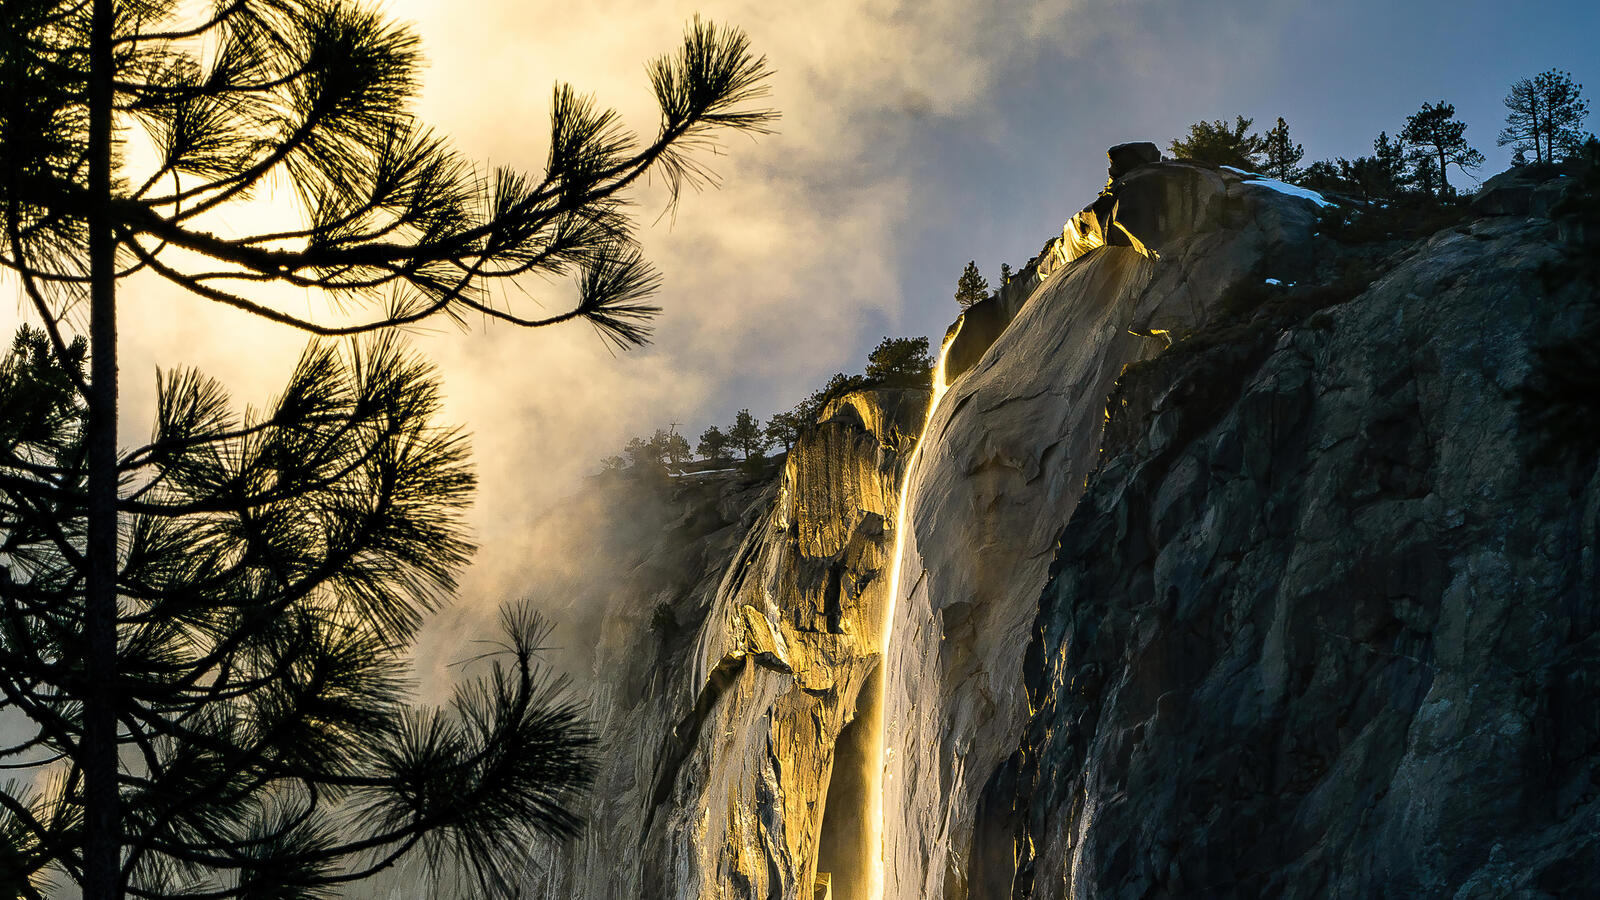 Wallpapers waterfall Yosemite nature on the desktop